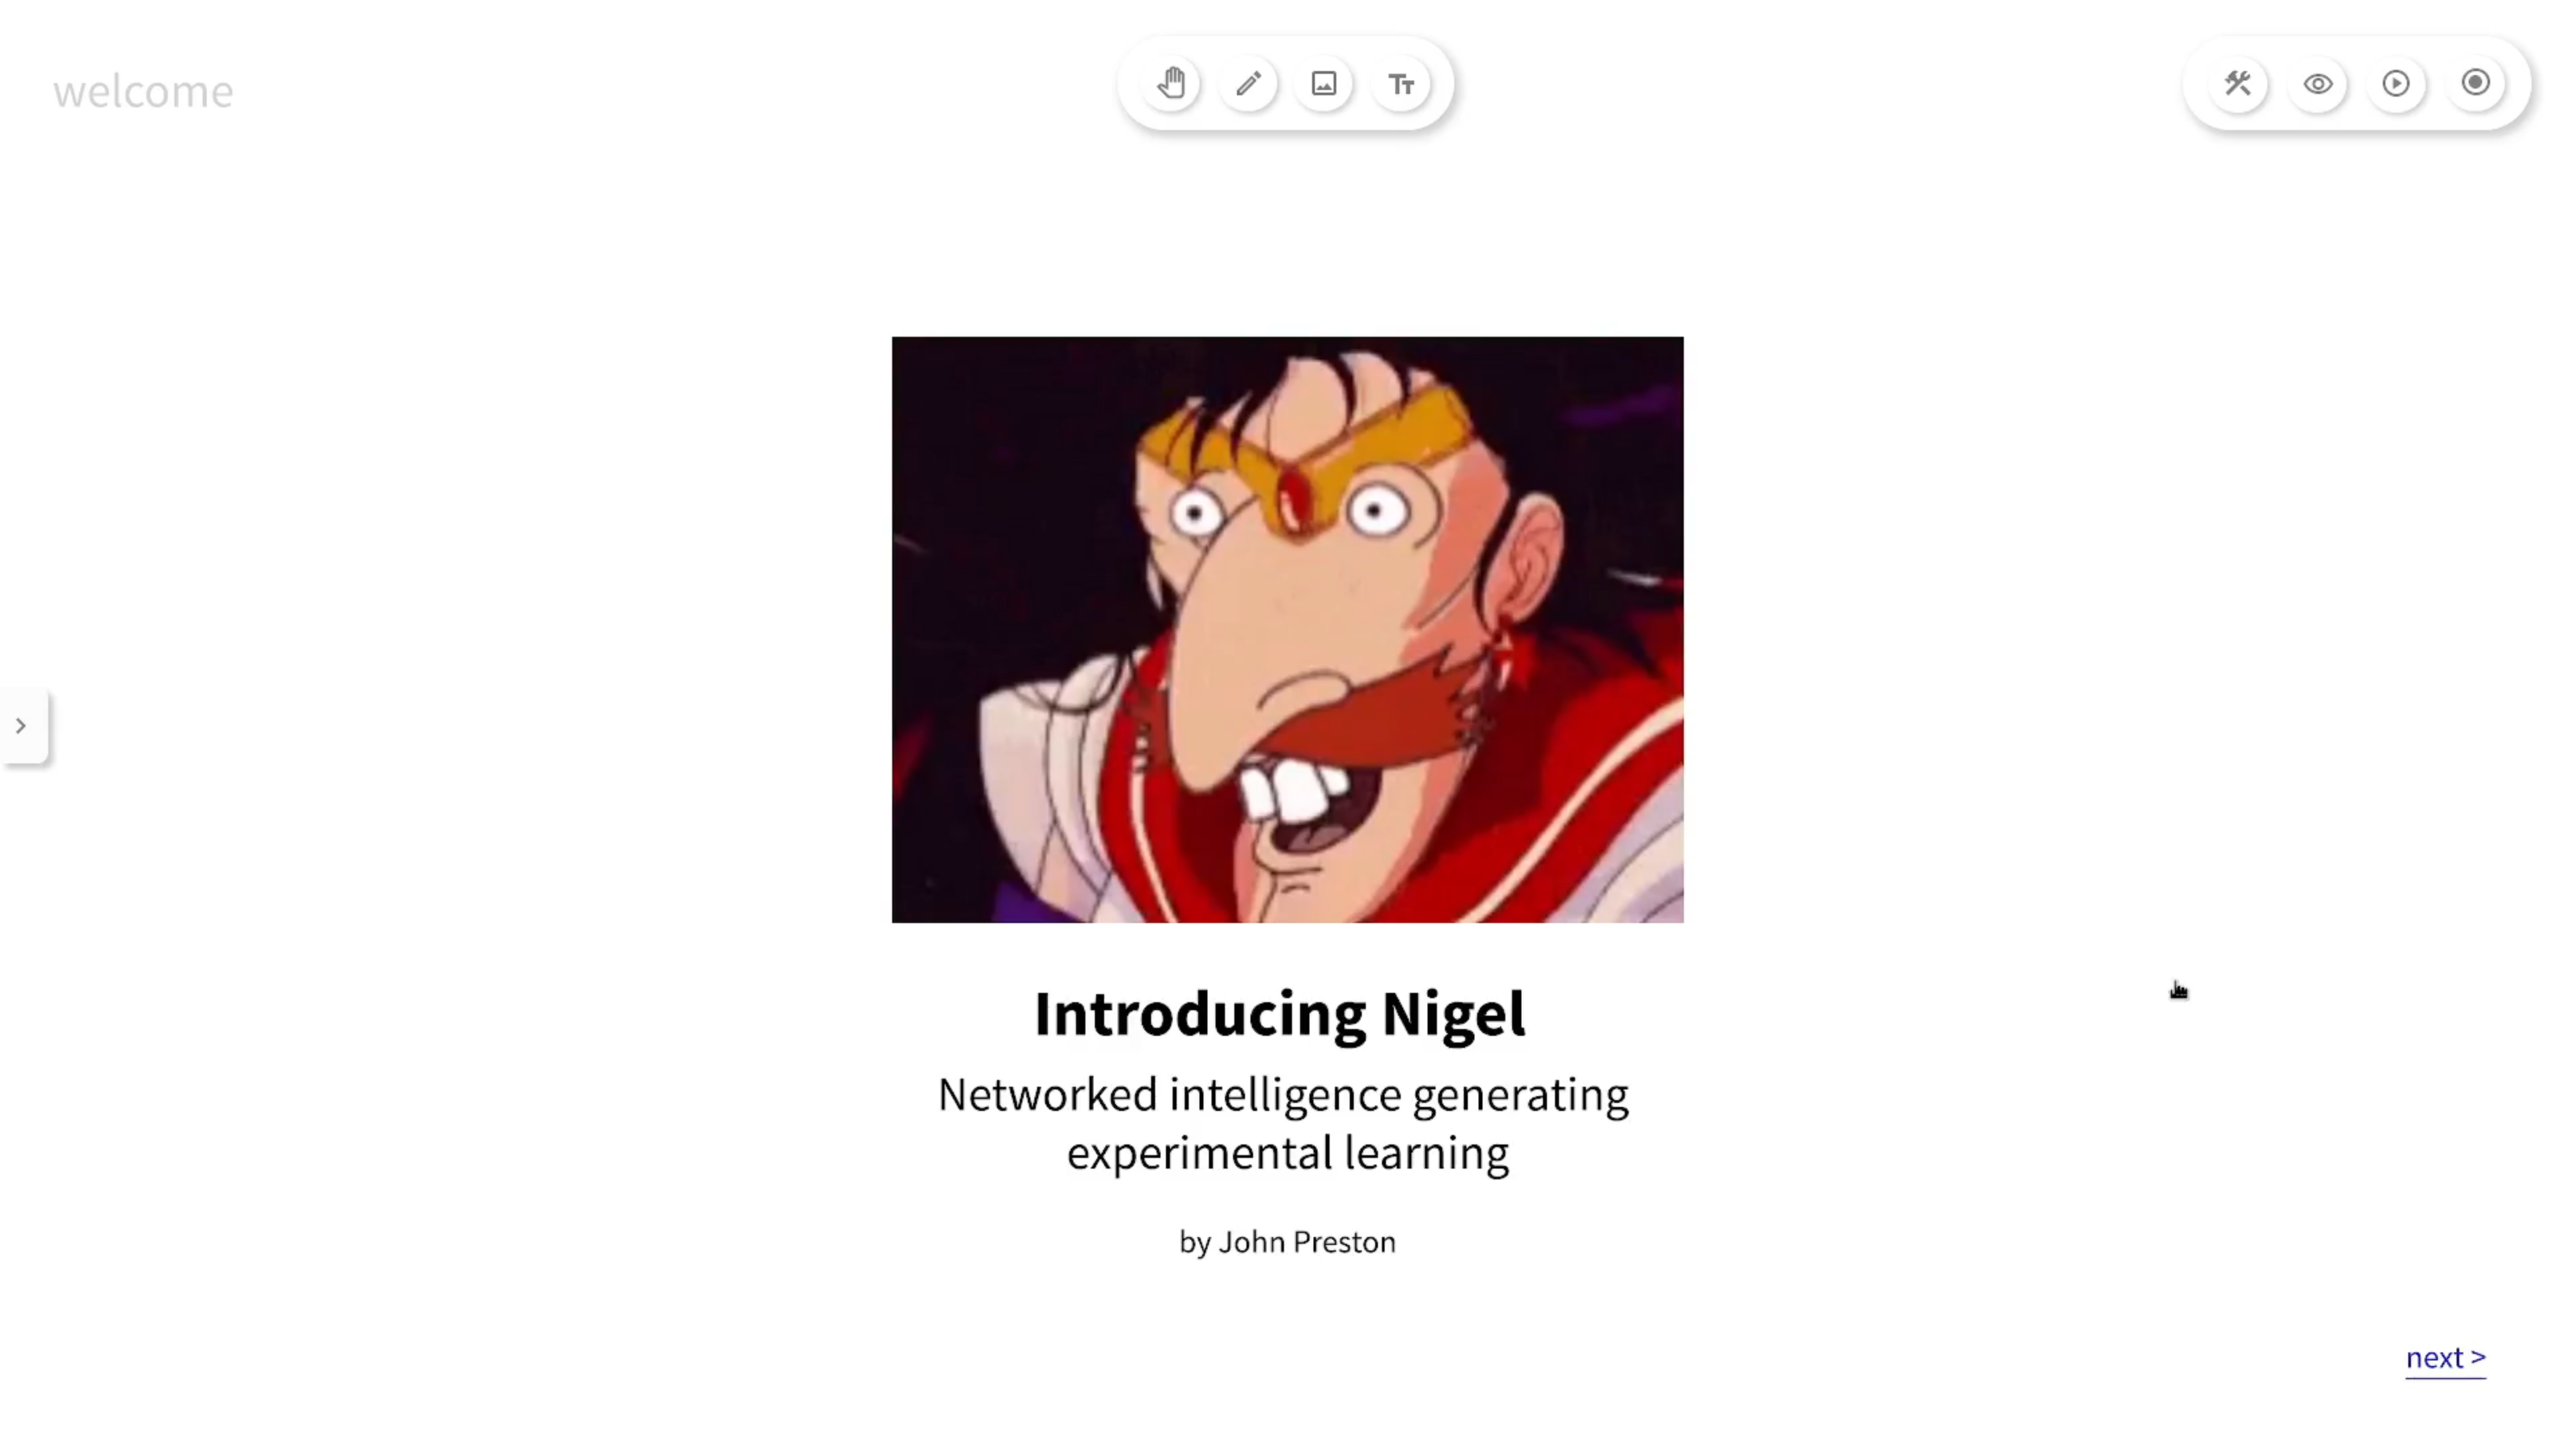 Introducing Nigel